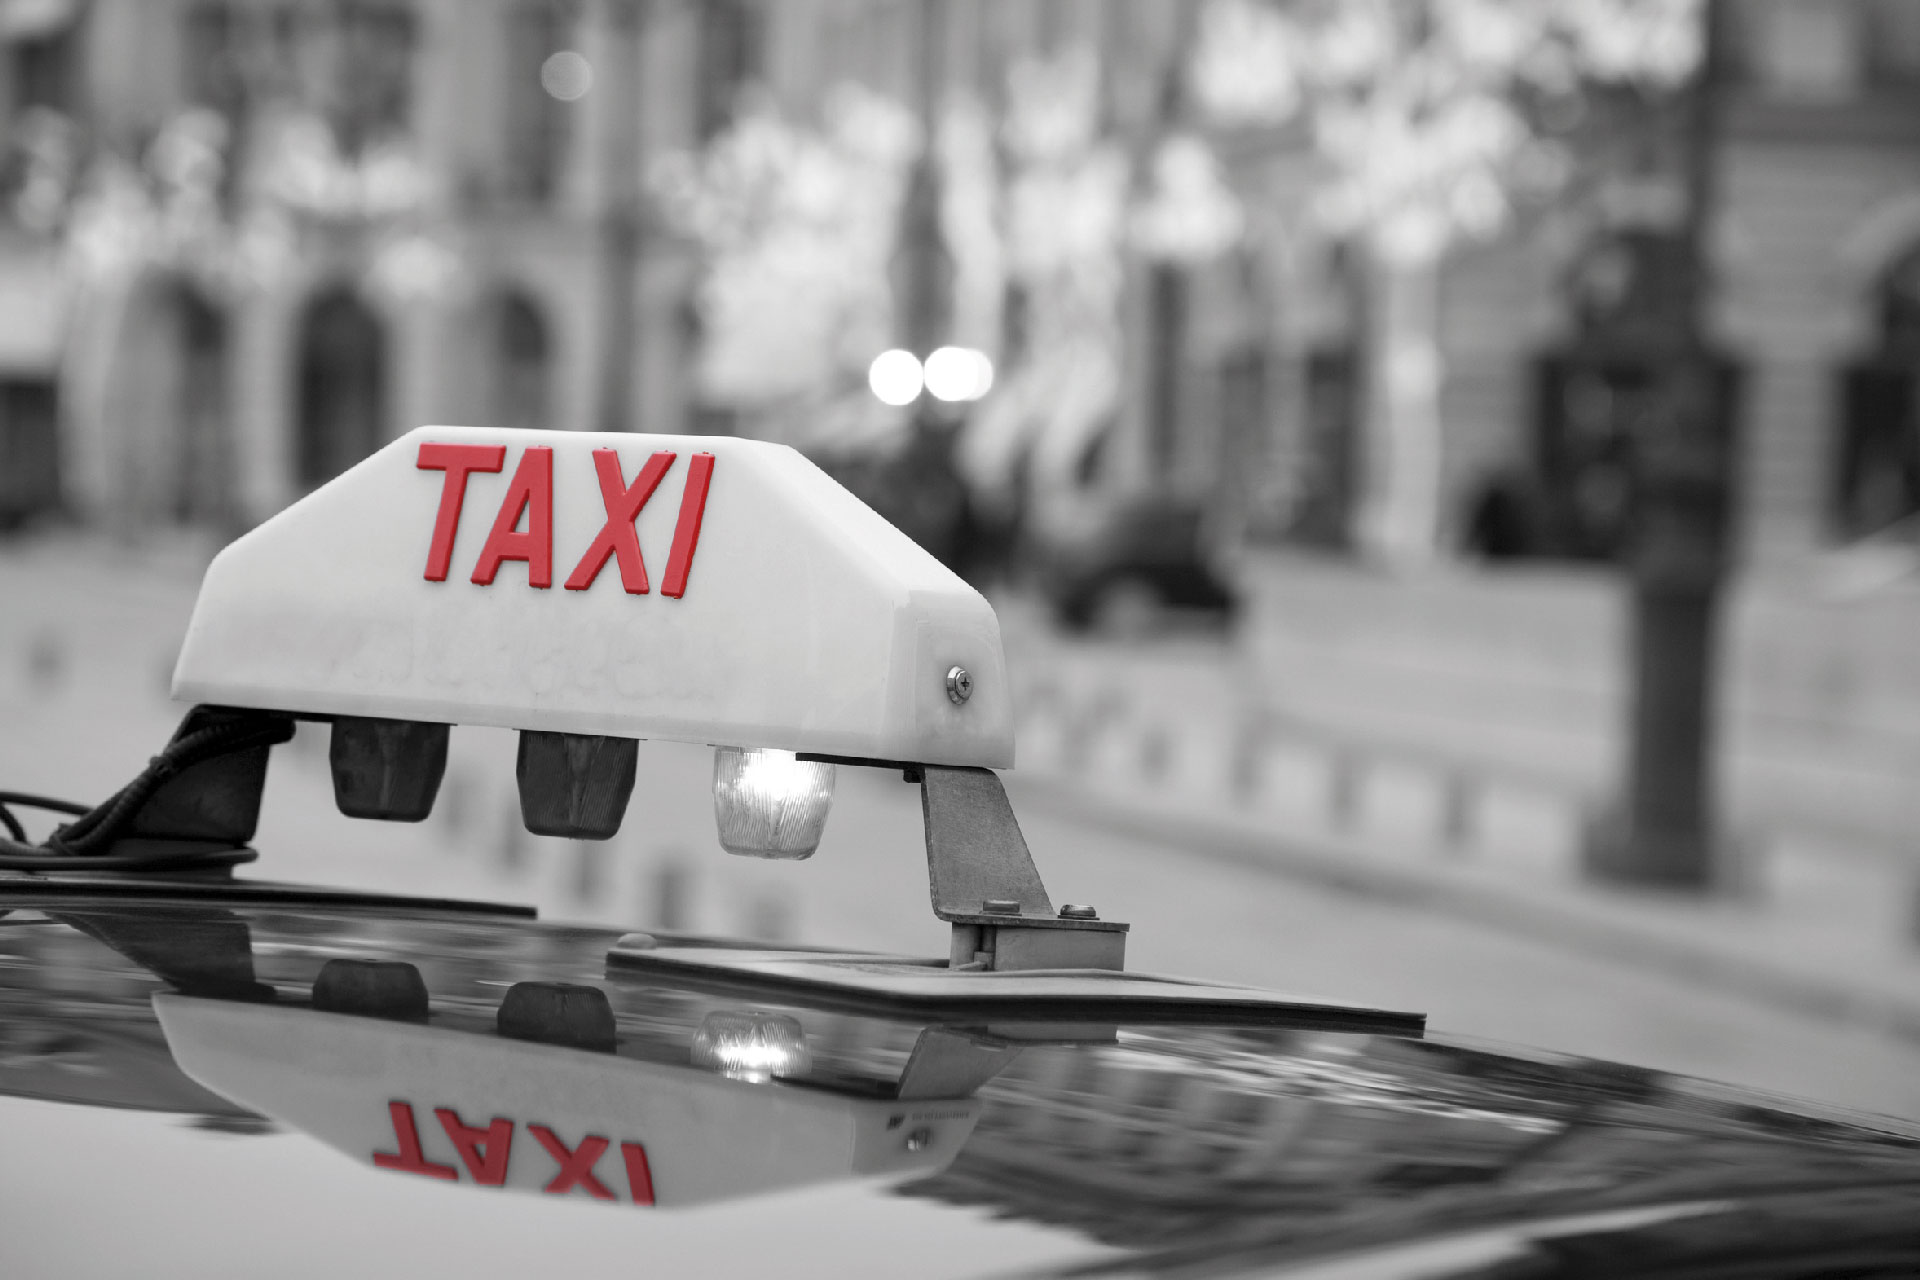 Такси дом 4. Такси в Париже. Танк такси. Танк такси фото. Прикольные картинки Парижа фон такси.